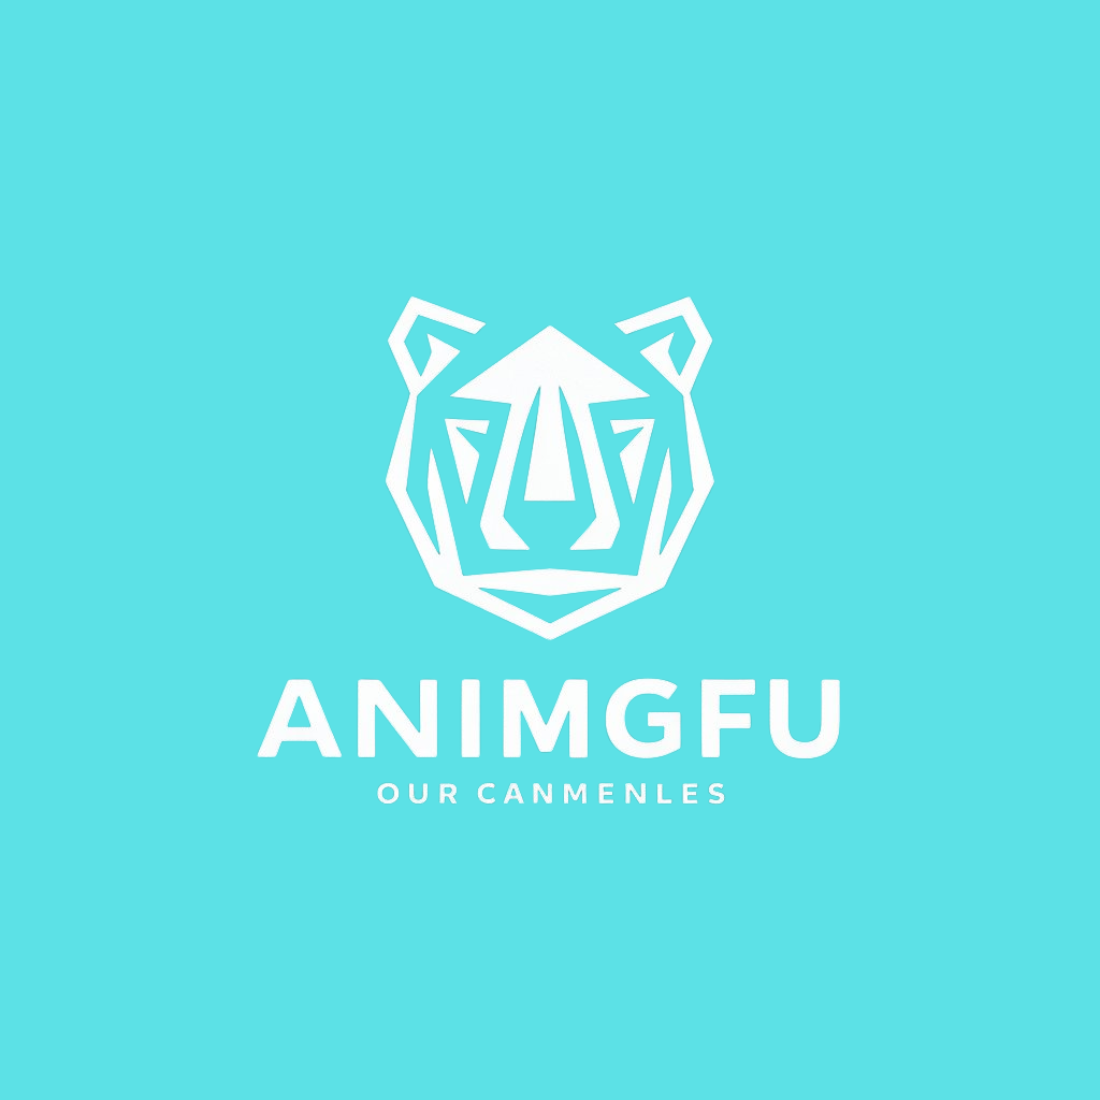 Animal logo design cover image.